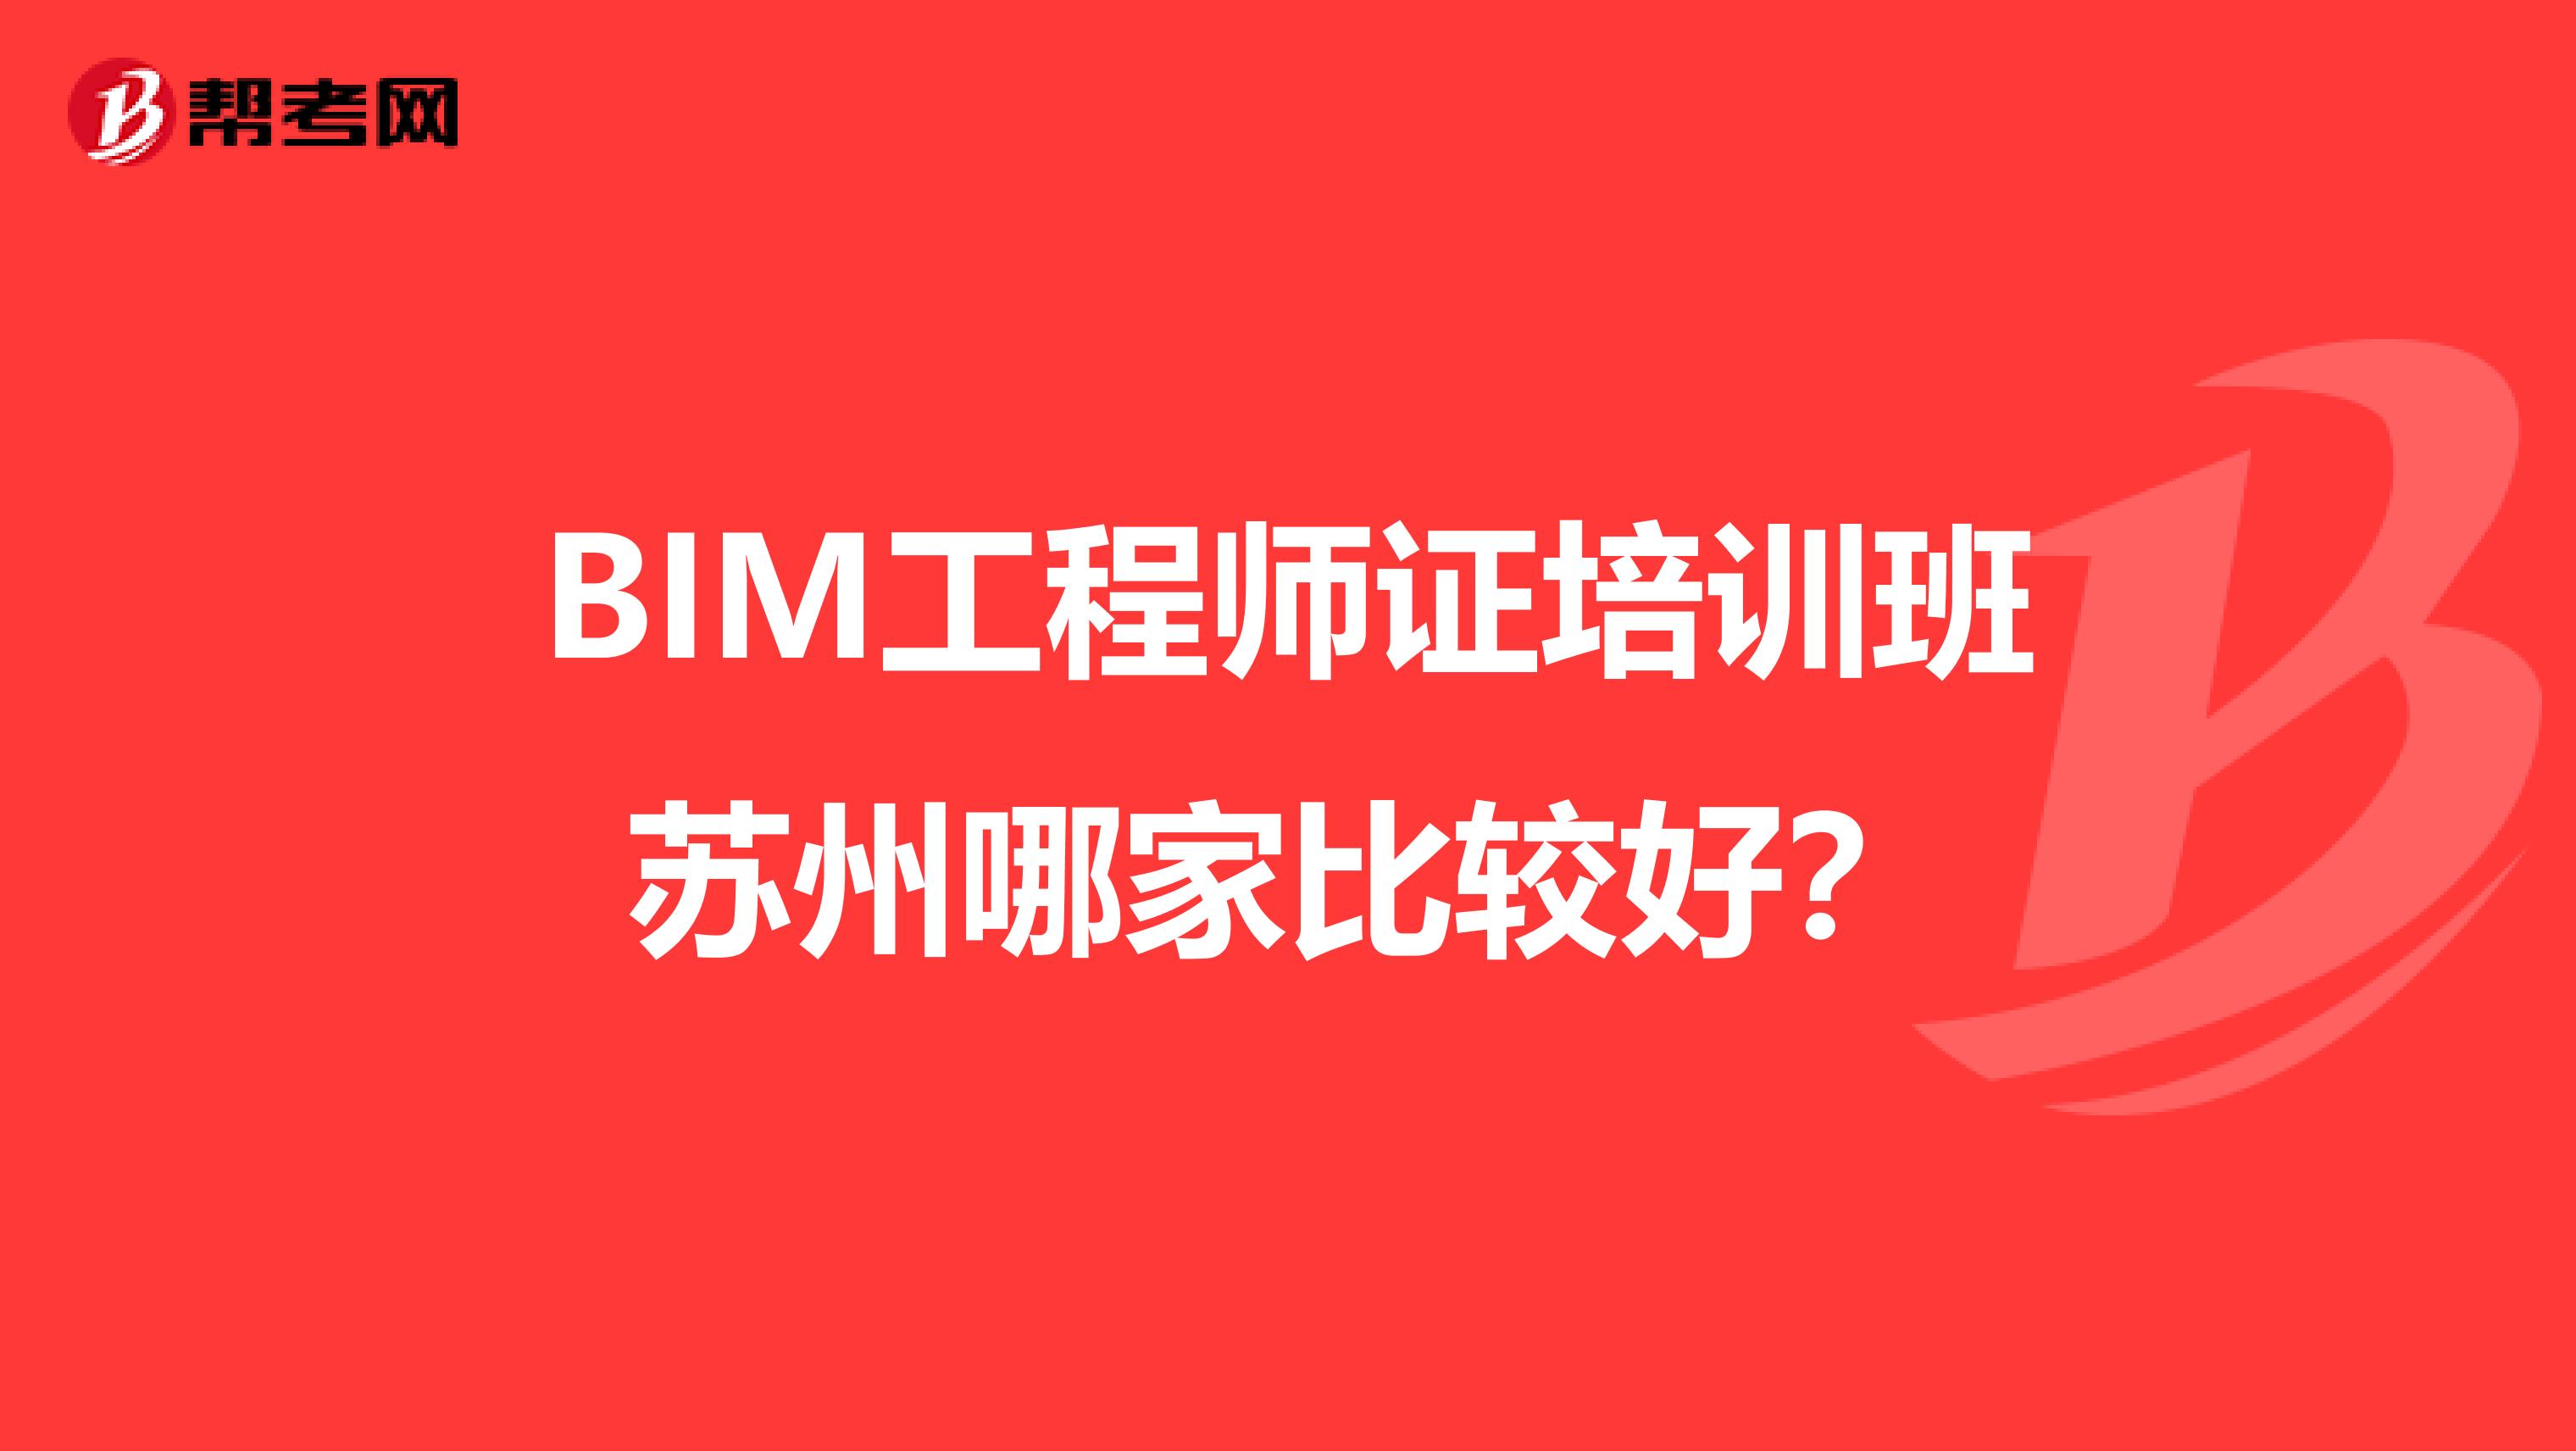 bim工程师是几级证,bim工程师证书有几级  第1张